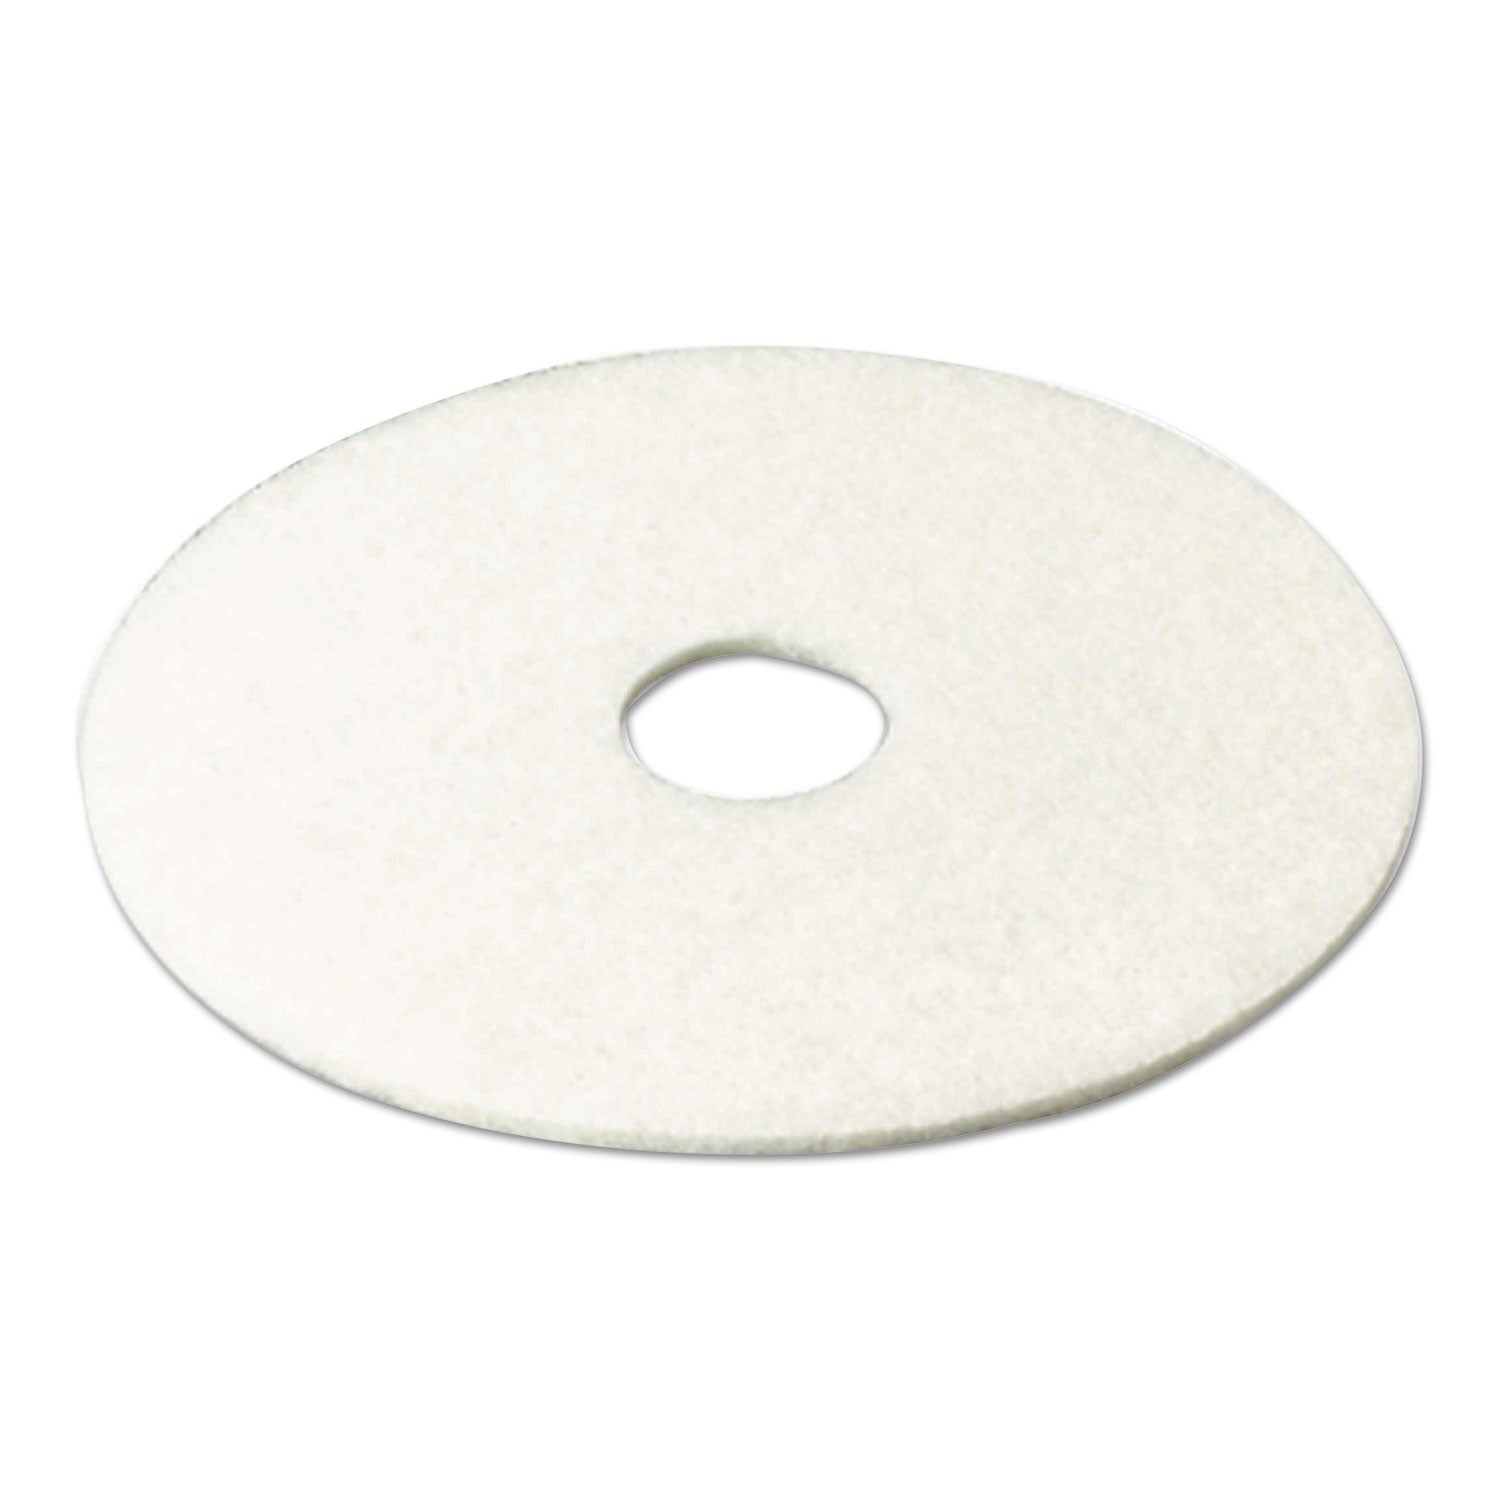 Low-Speed Super Polishing Floor Pads 4100, 20" Diameter, White, 5/Carton - 